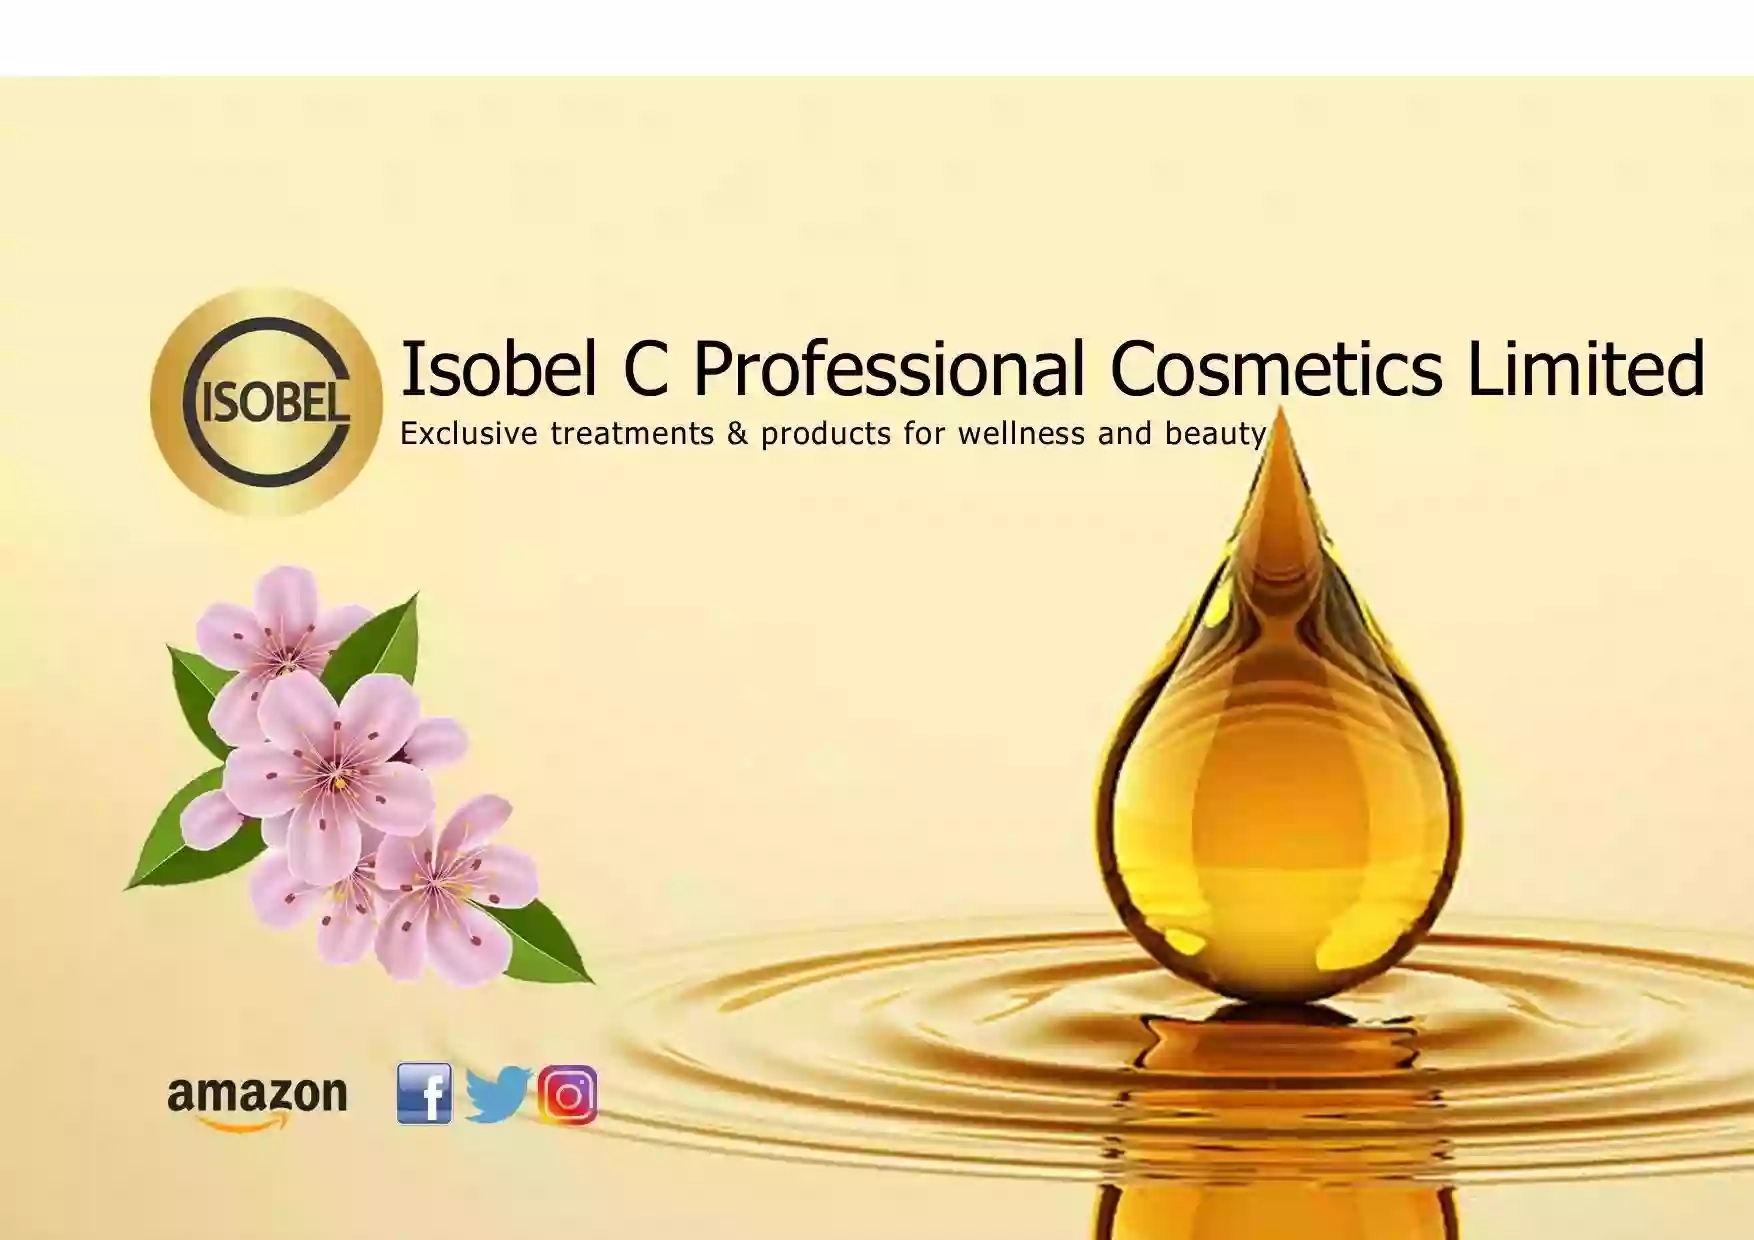 Isobel C Professional Cosmetics Ltd